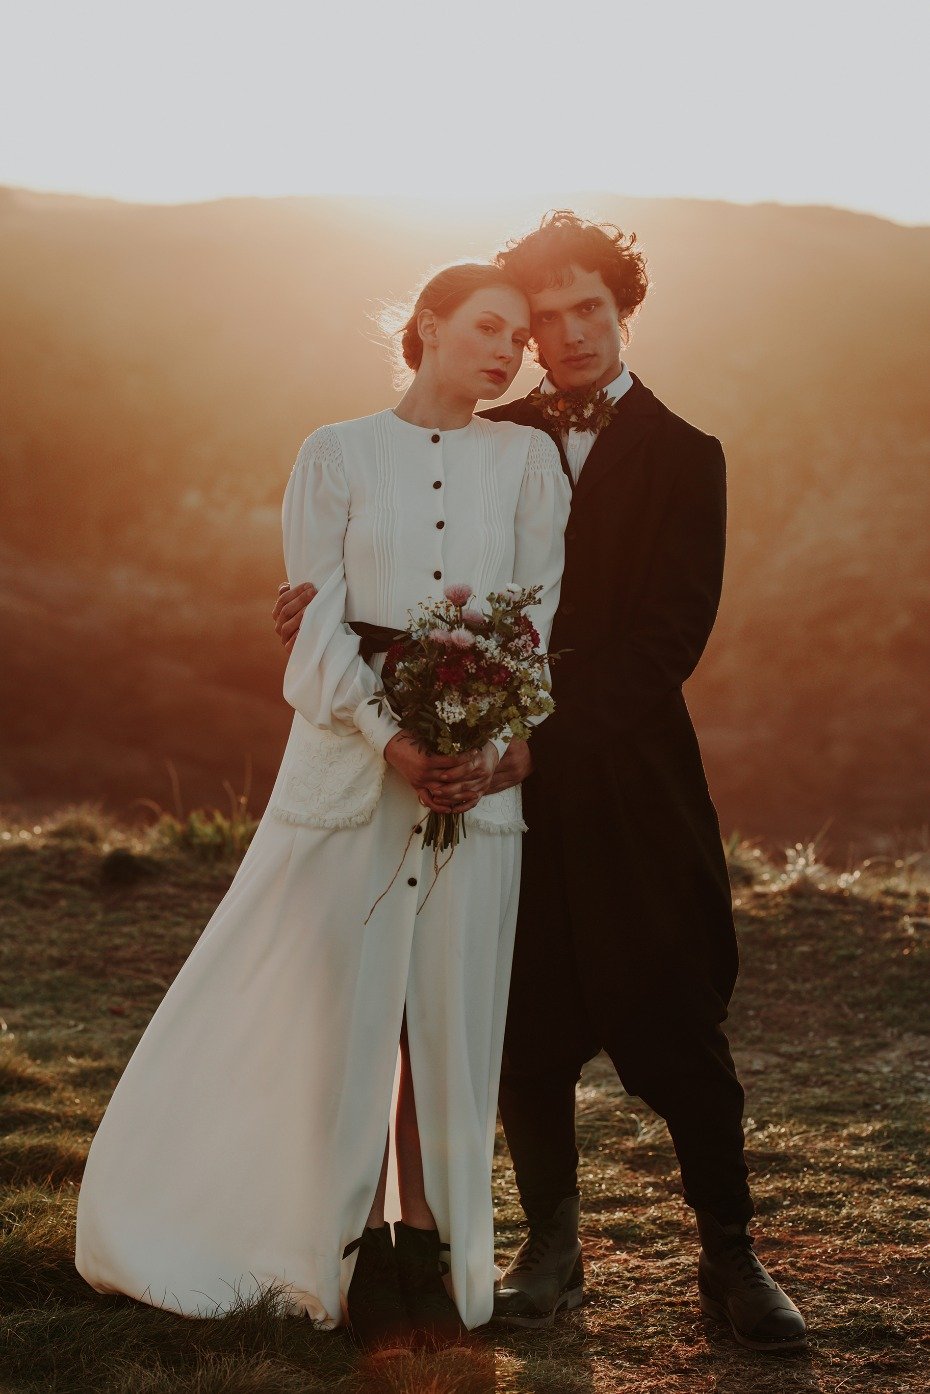 Amish inspired wedding ideas